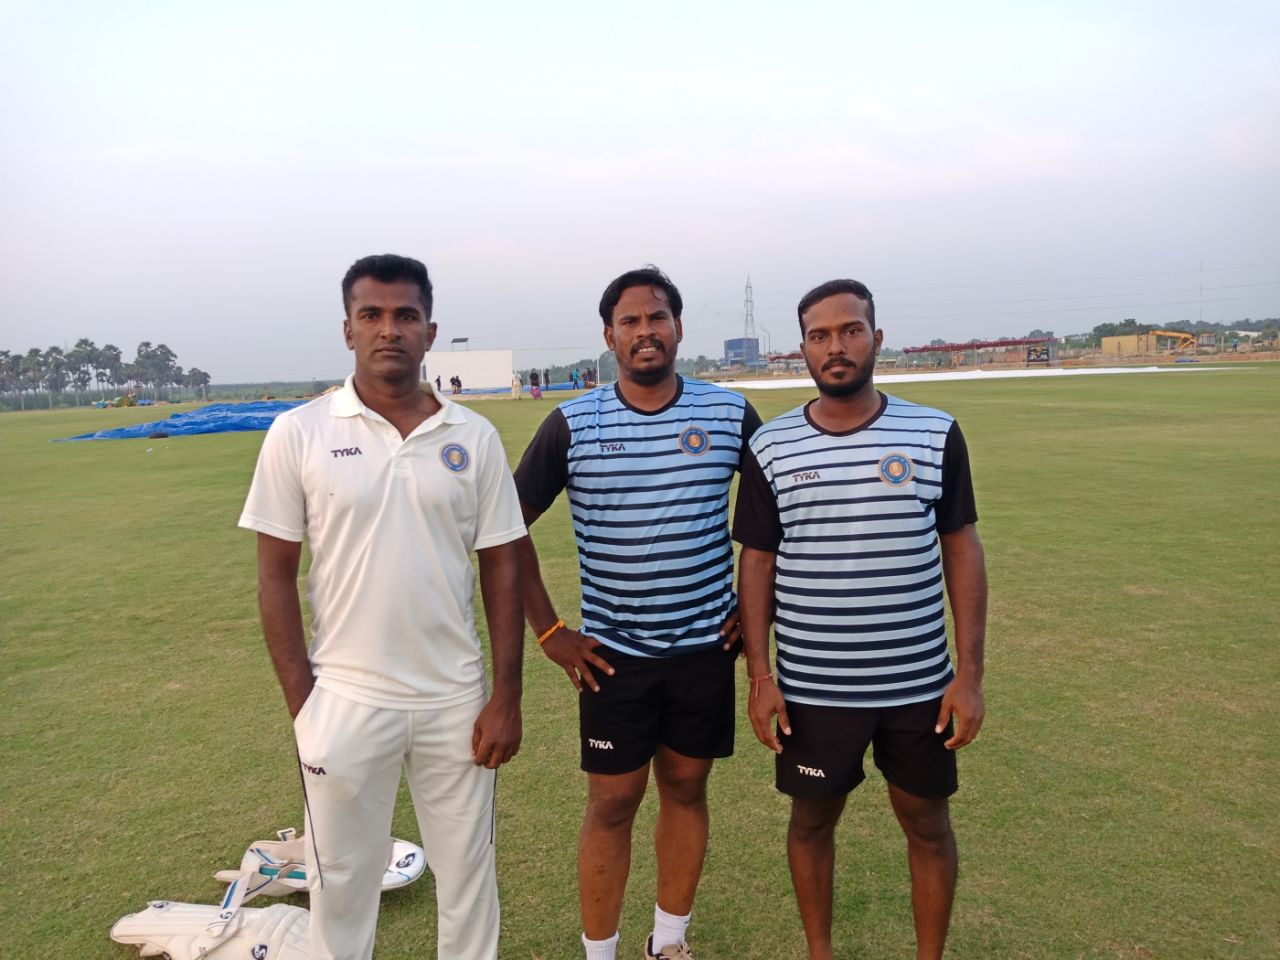 AM Narayanan, Saiju Titus and Ranjit Baskaran were all called up at the last minute after several players had been disallowed, Puducherry v Mizoram, Ranji Trophy 2018-19, Puducherry, December 1, 2018